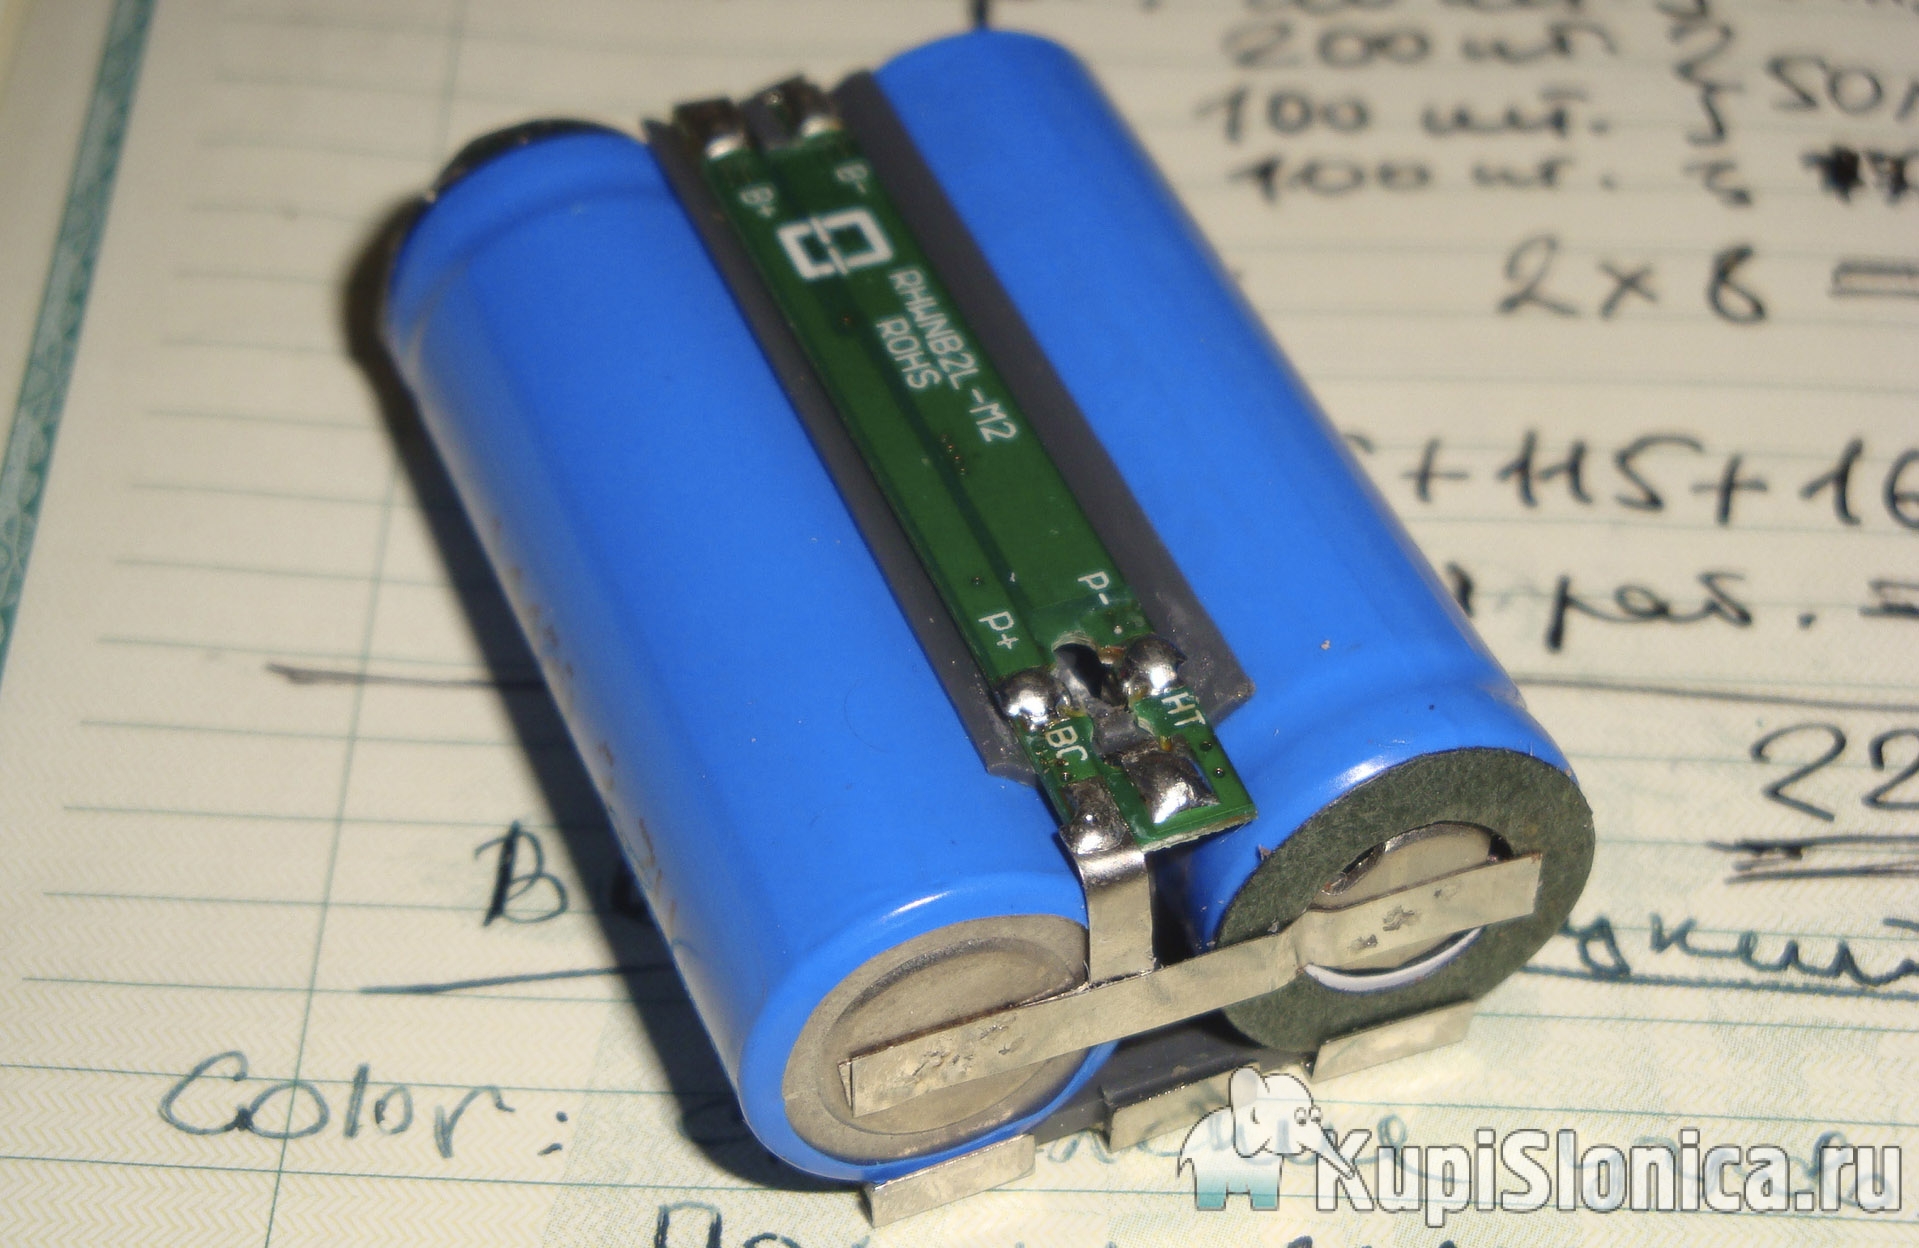 Типы современных литиевых аккумуляторных батарей